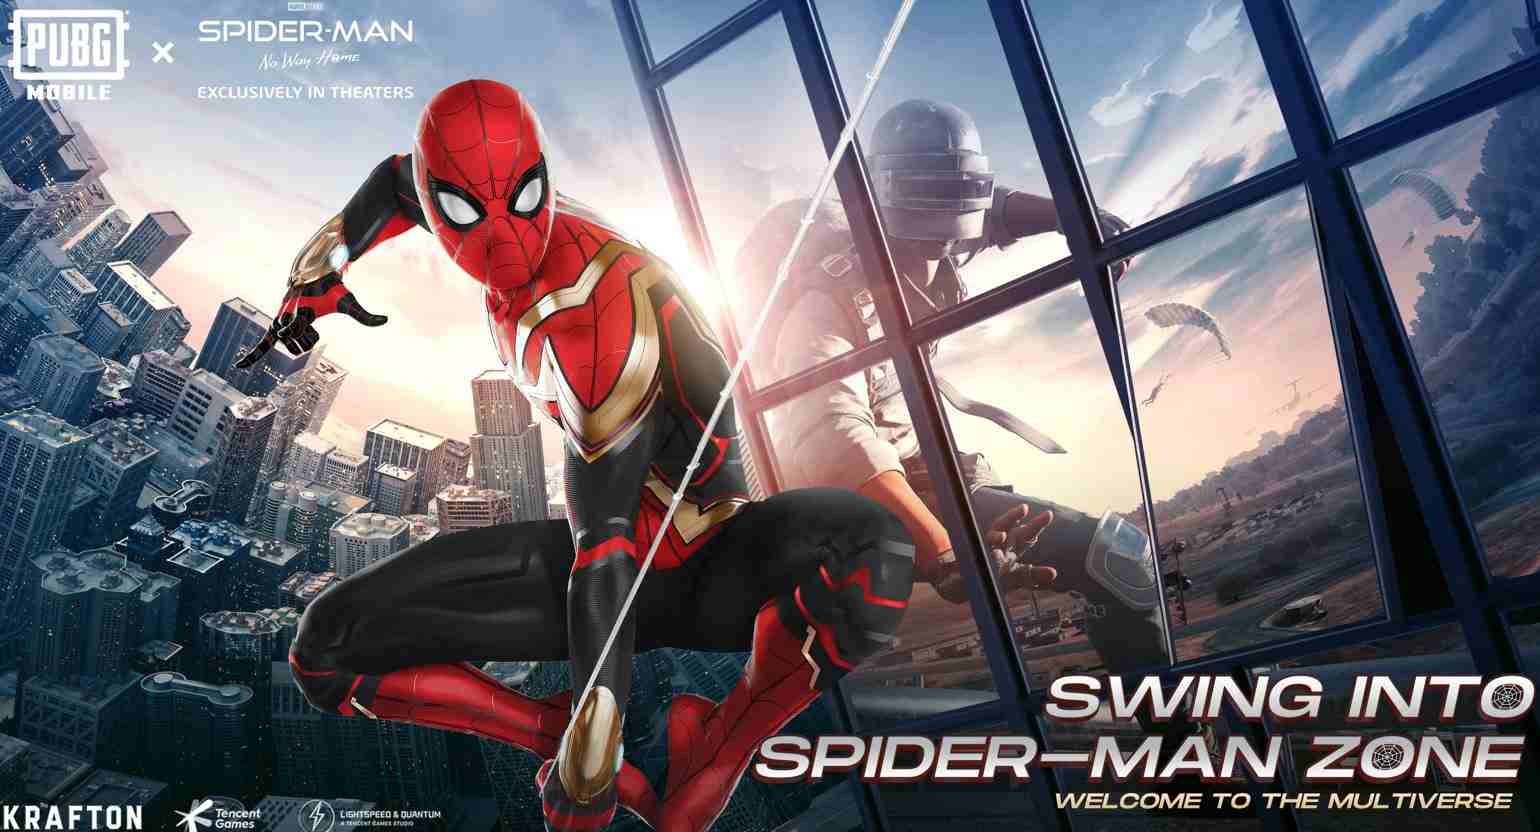 Spider Man Suit in BGMI is Coming Soon!